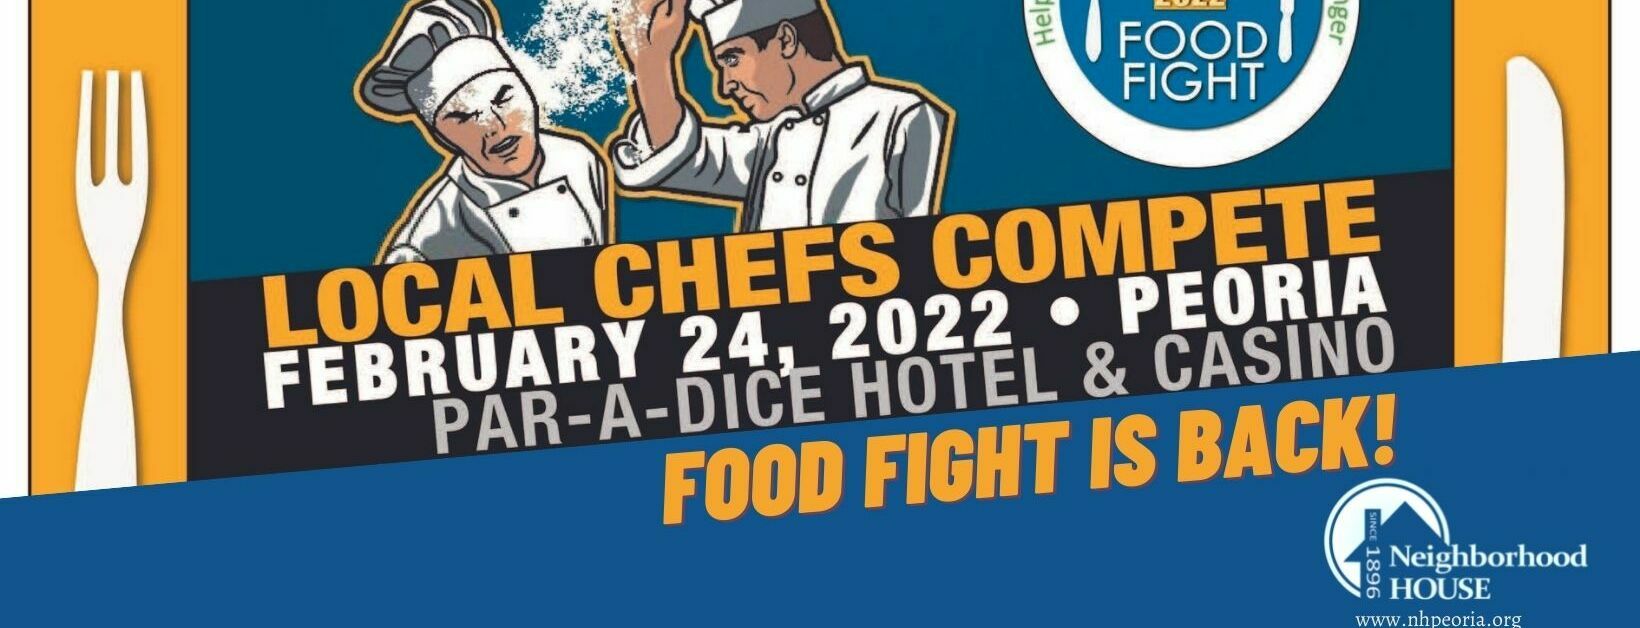 2022 Food Fight